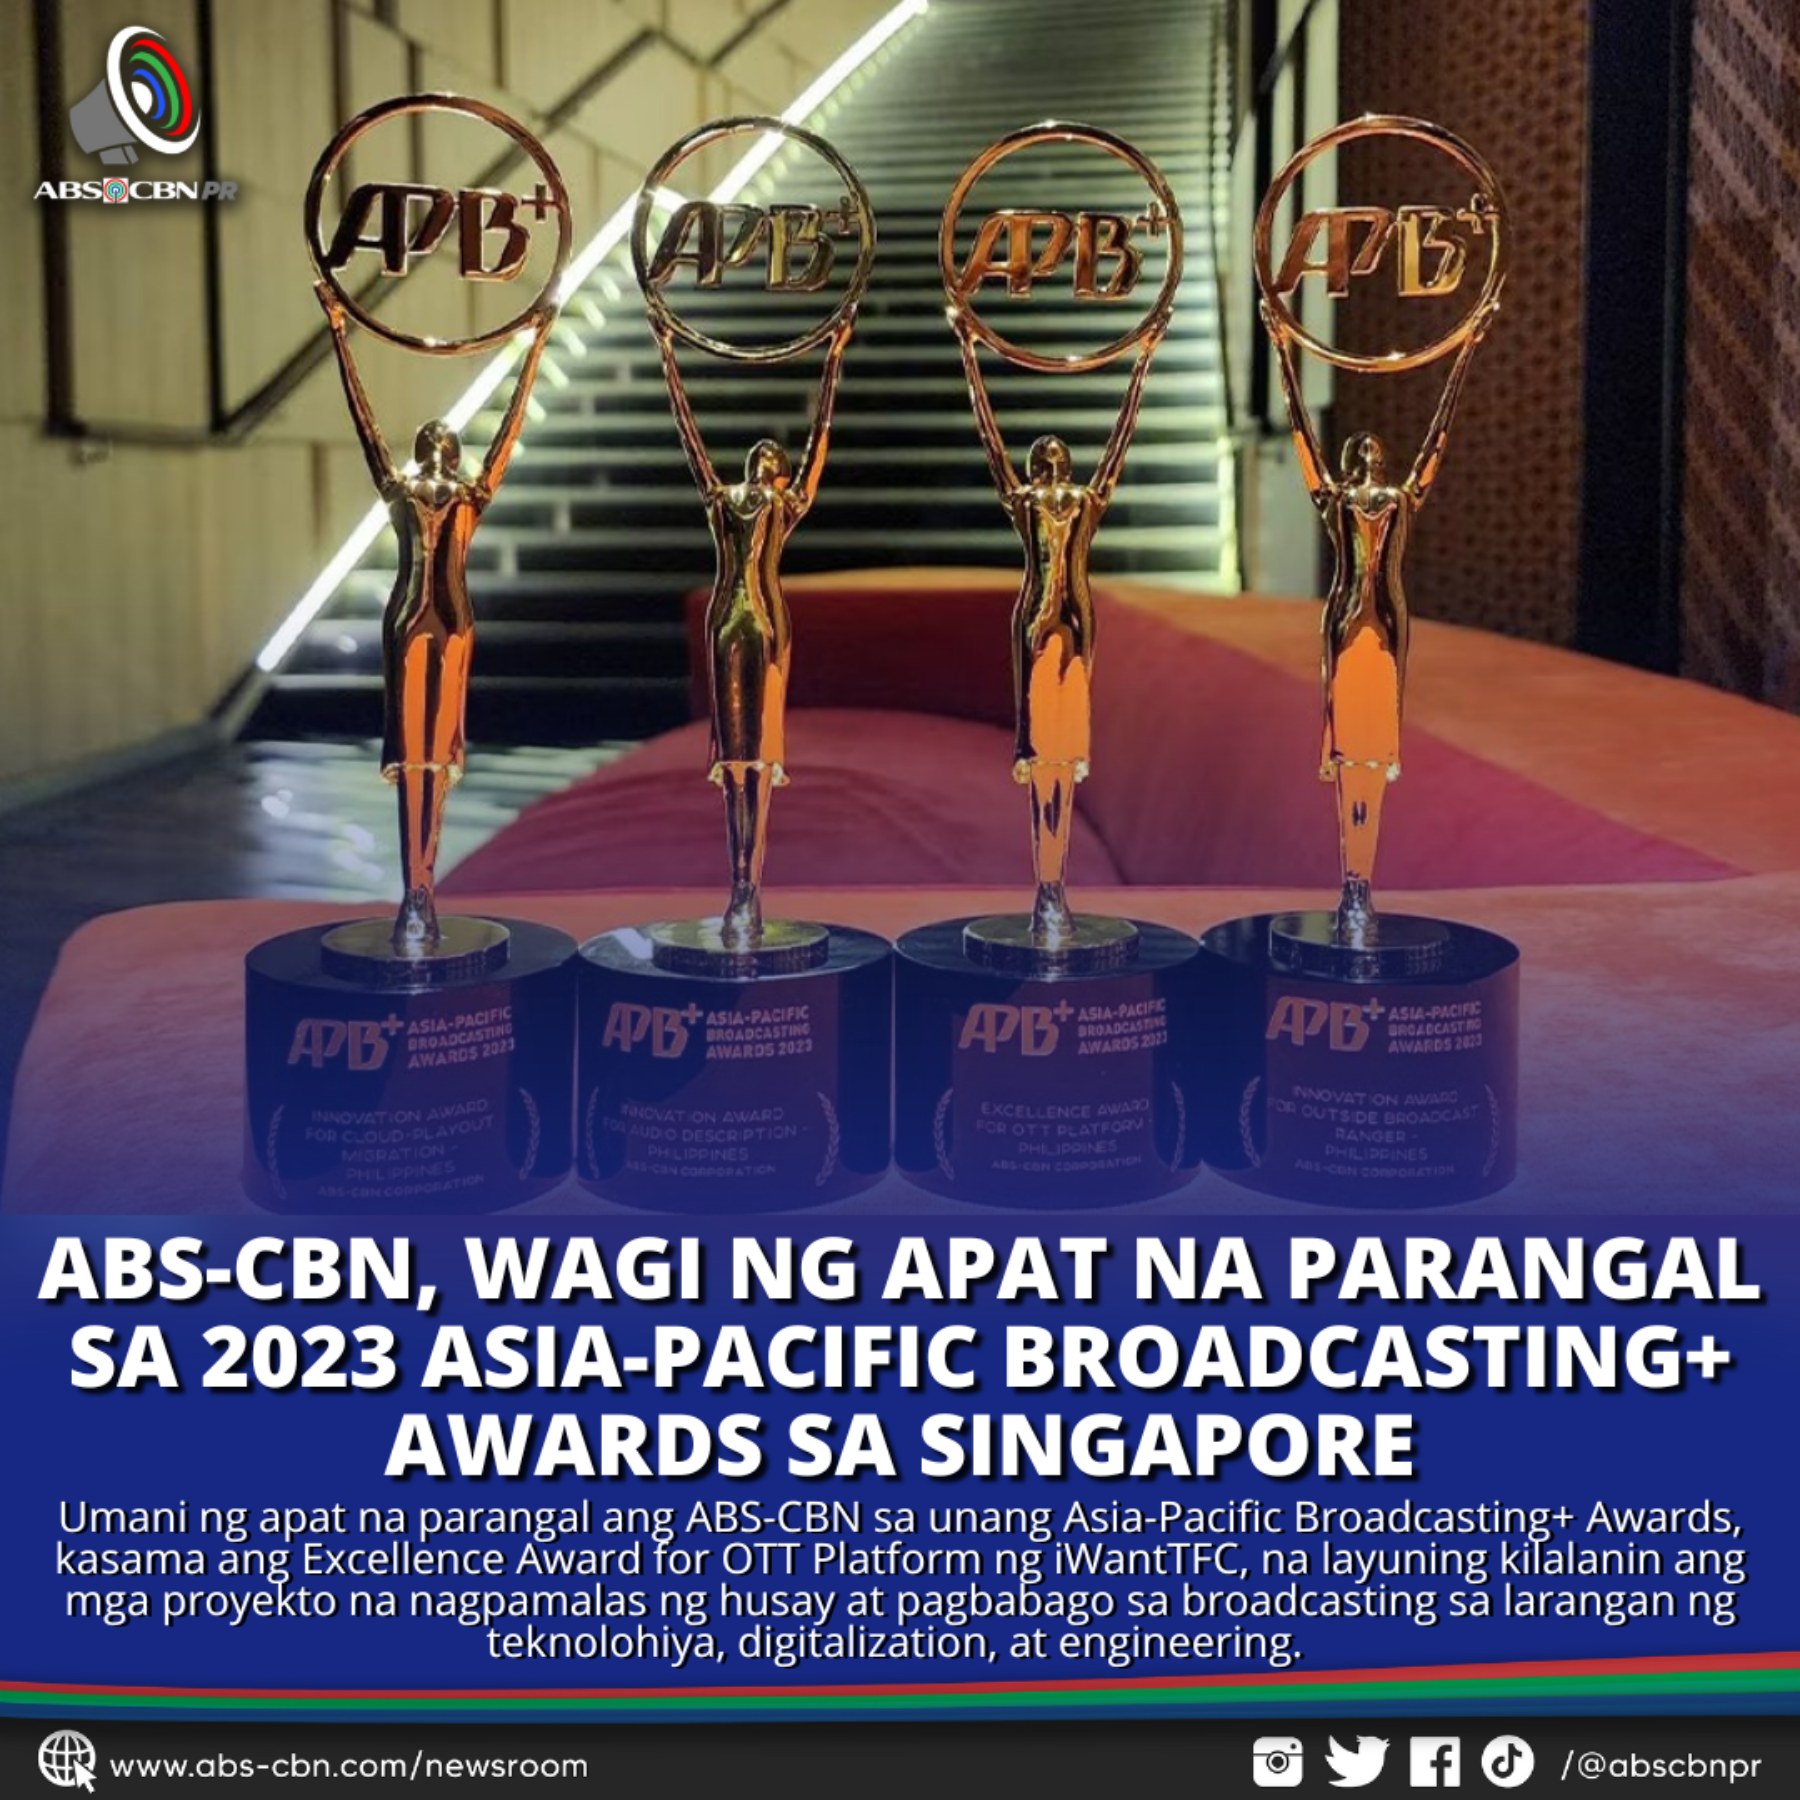 ASIA PACIFIC BROADCASTING AWARDS FILIPINO